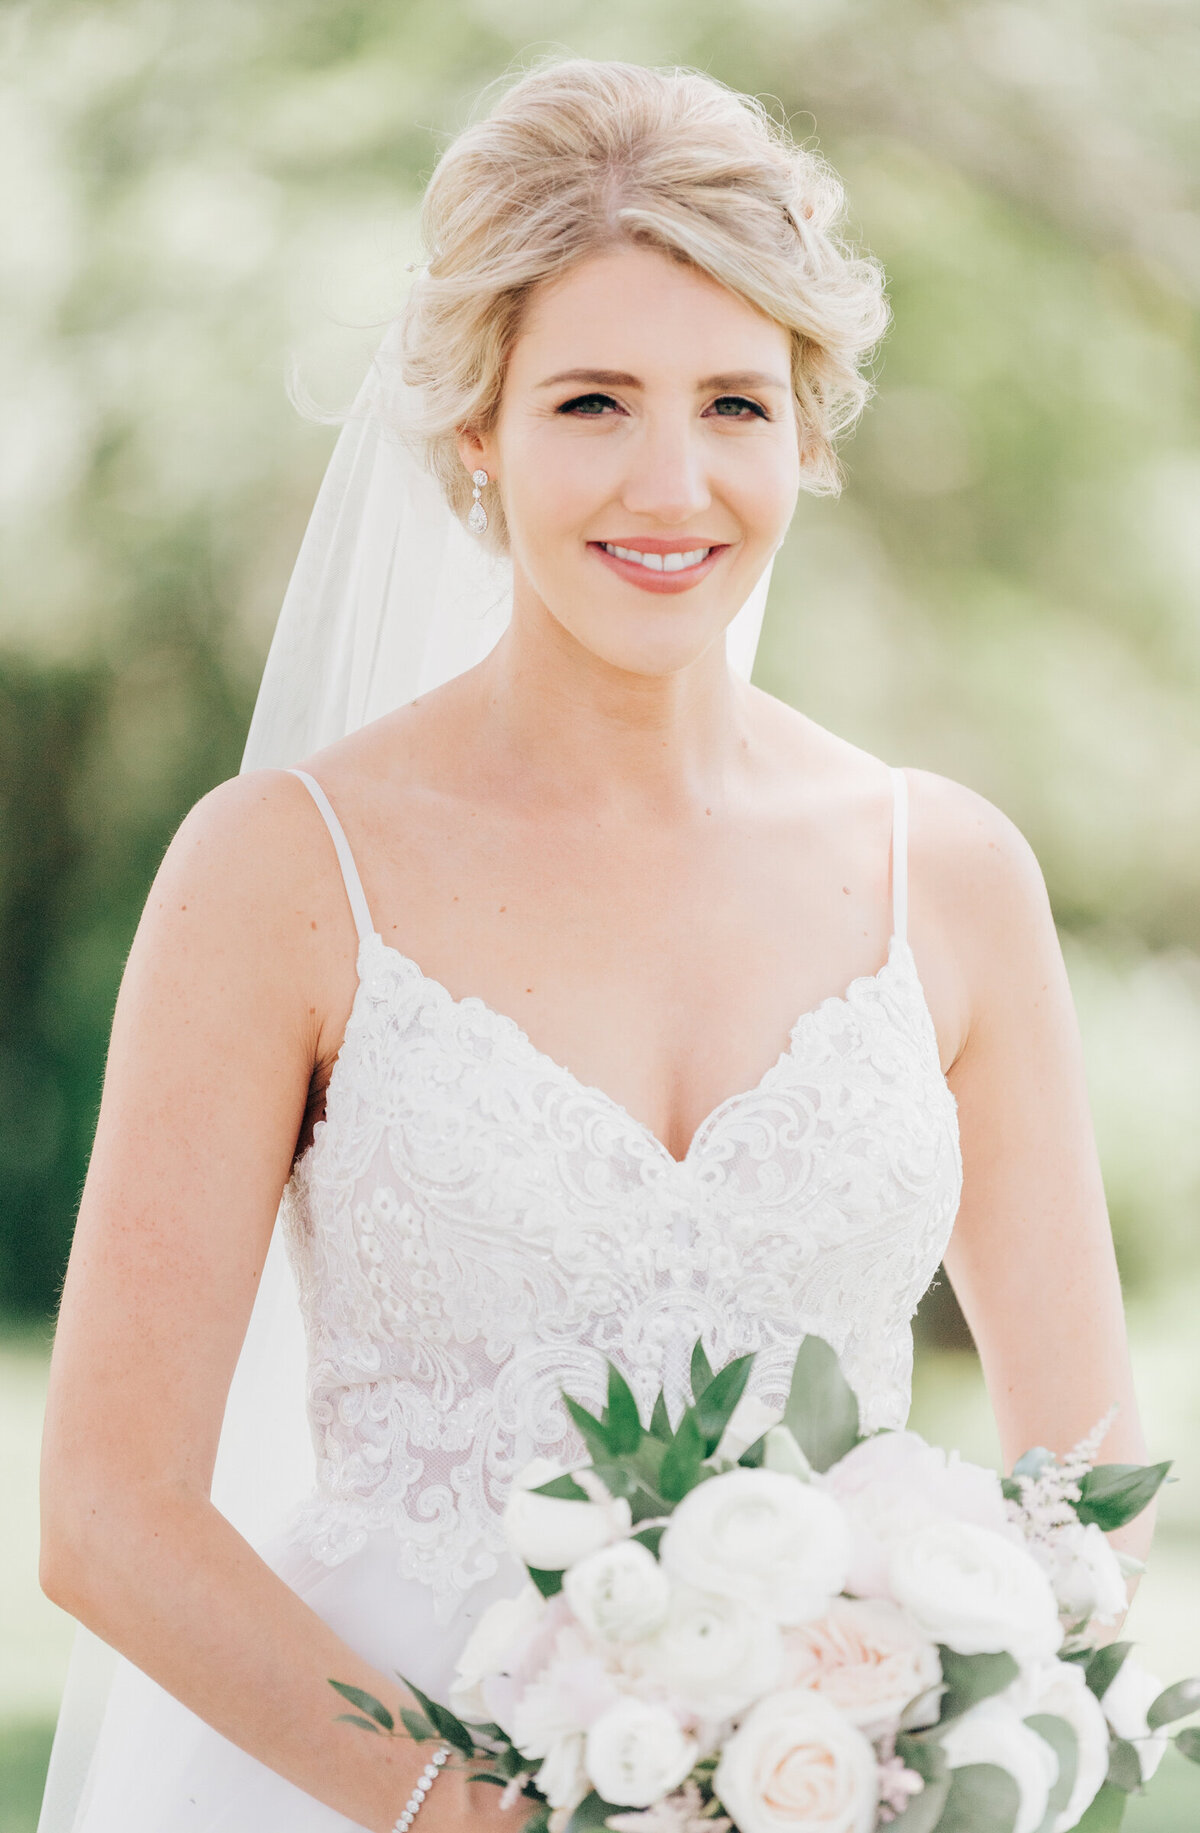 Elegant portrait of beautiful bride holding bouquet of white florals and eucalyptus